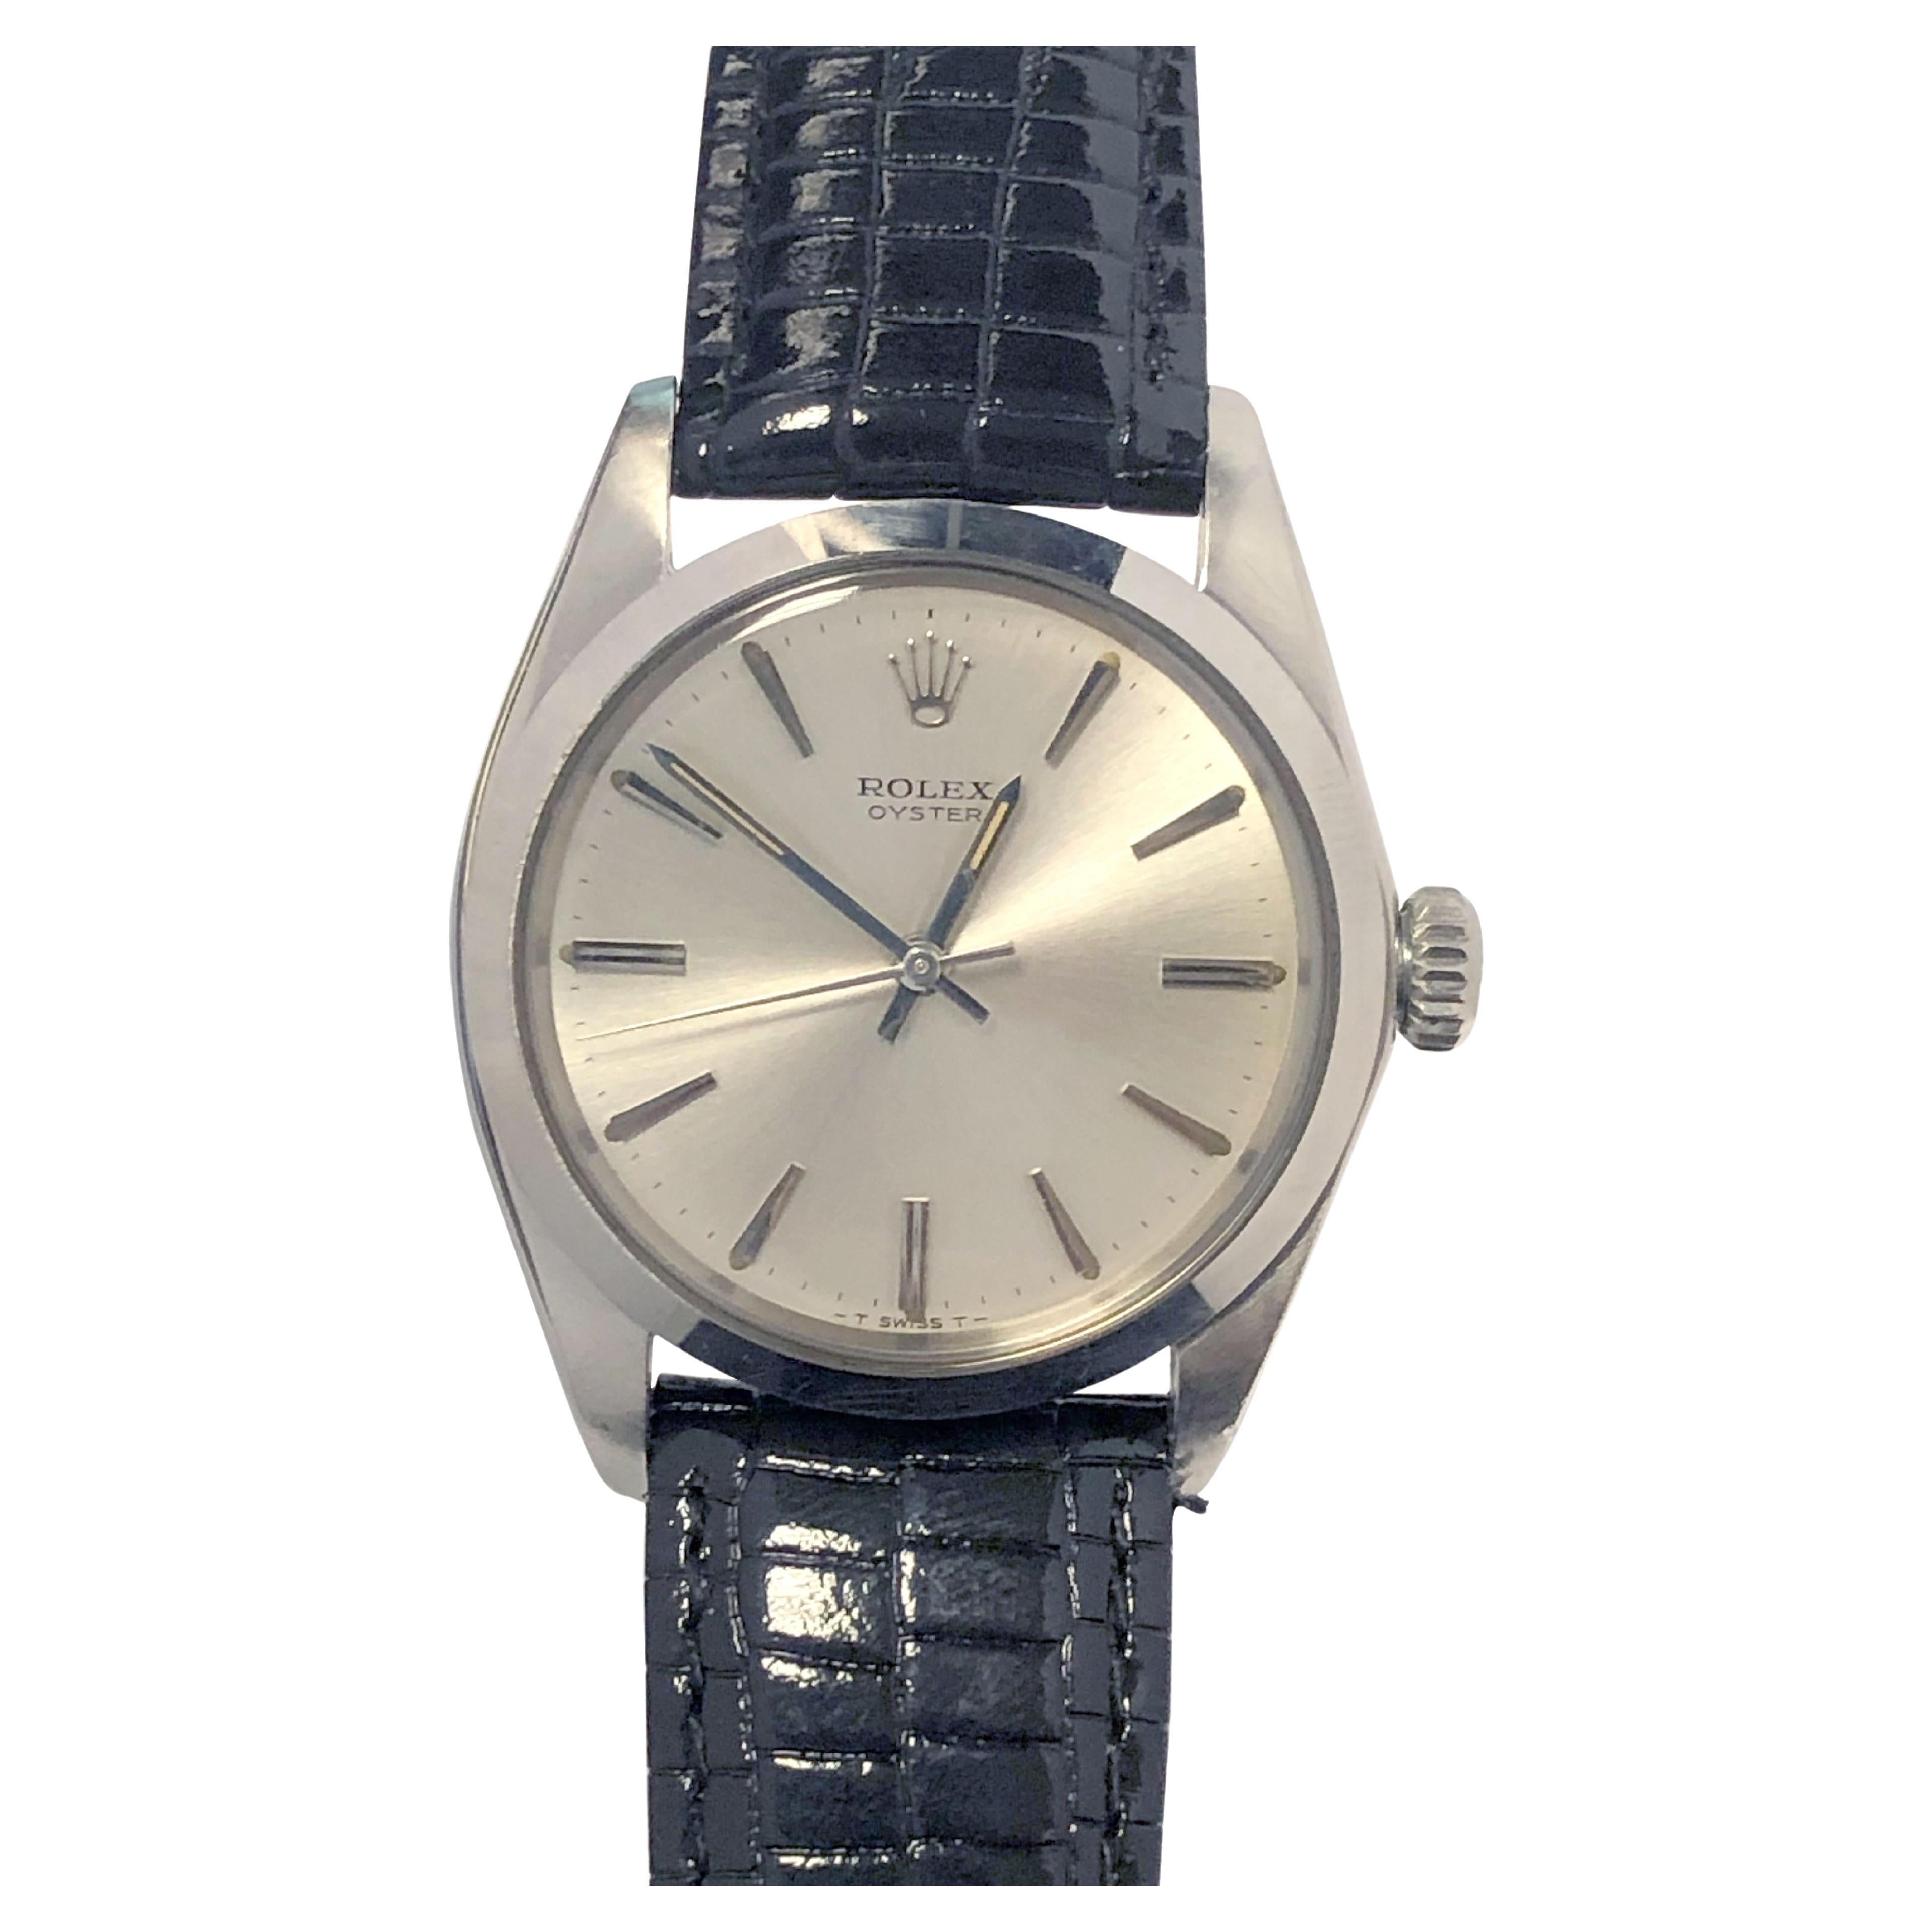 Rolex Vintage 1959 Oyster Edelstahl-Armbanduhr mit Handaufzug im Angebot